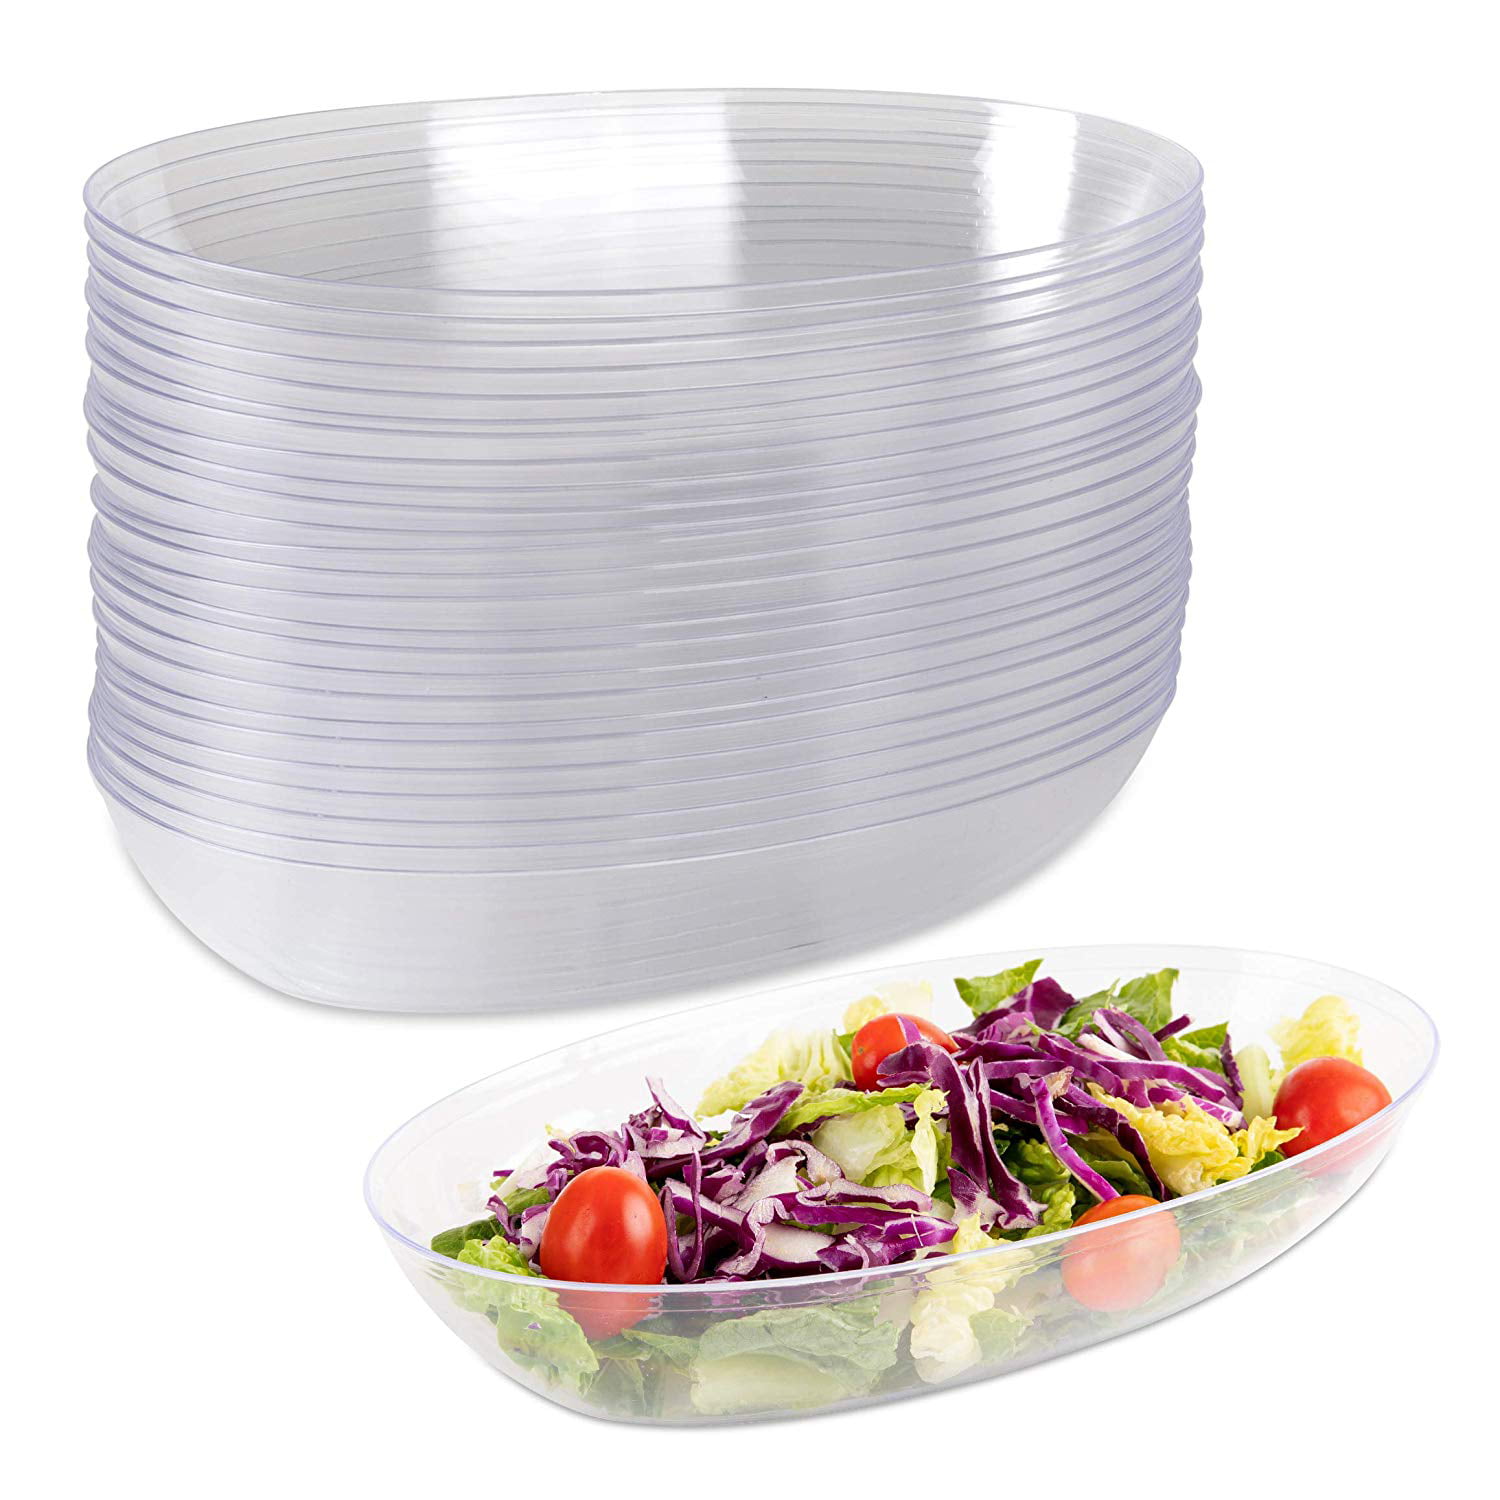 Impressive Creations Plastic Salad Bowl 42 Oz. (Pack of